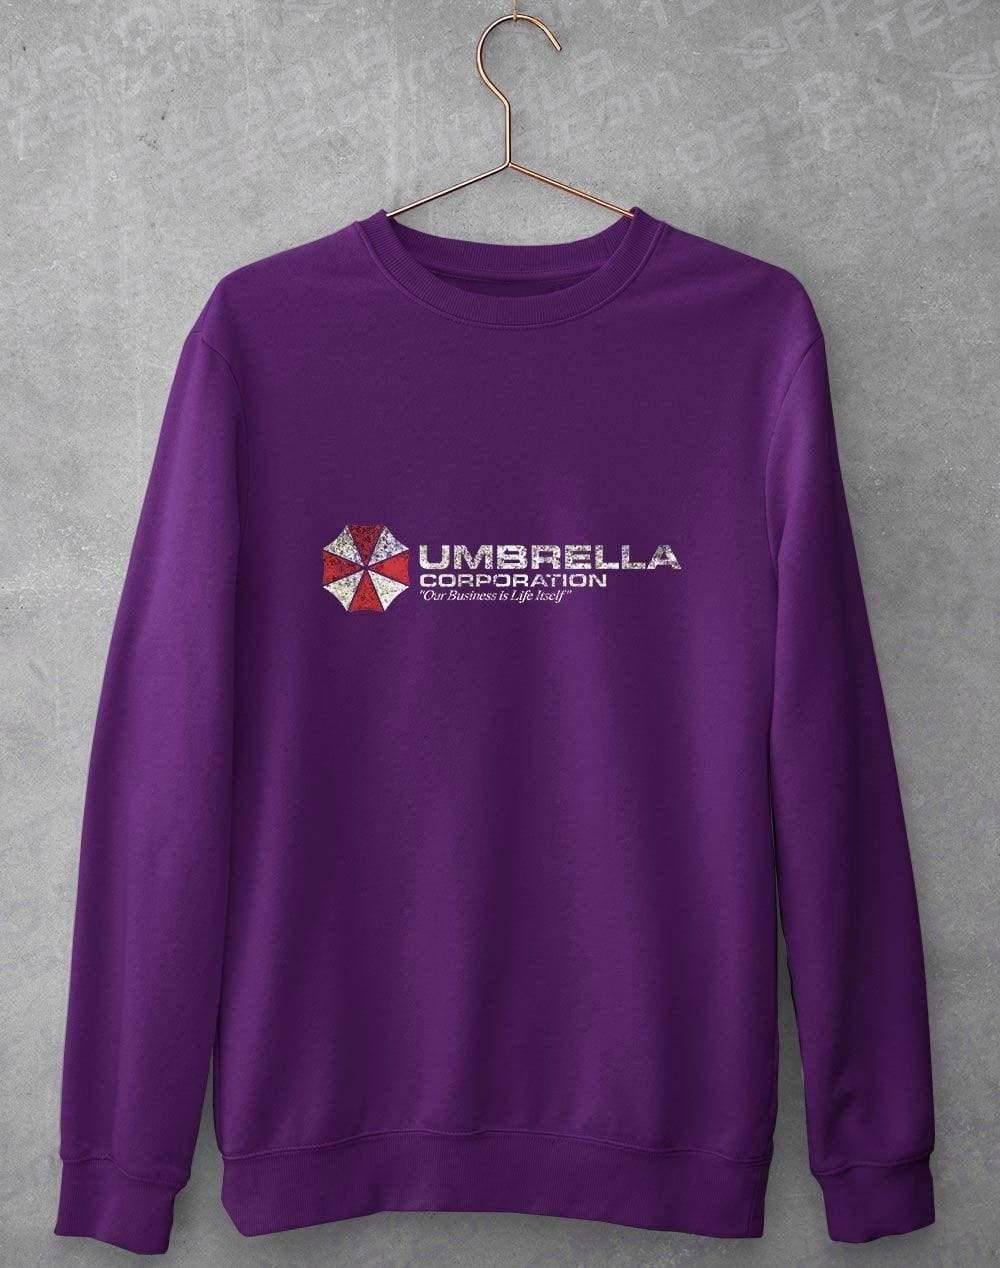 Umbrella Corporation Sweatshirt S / Purple  - Off World Tees